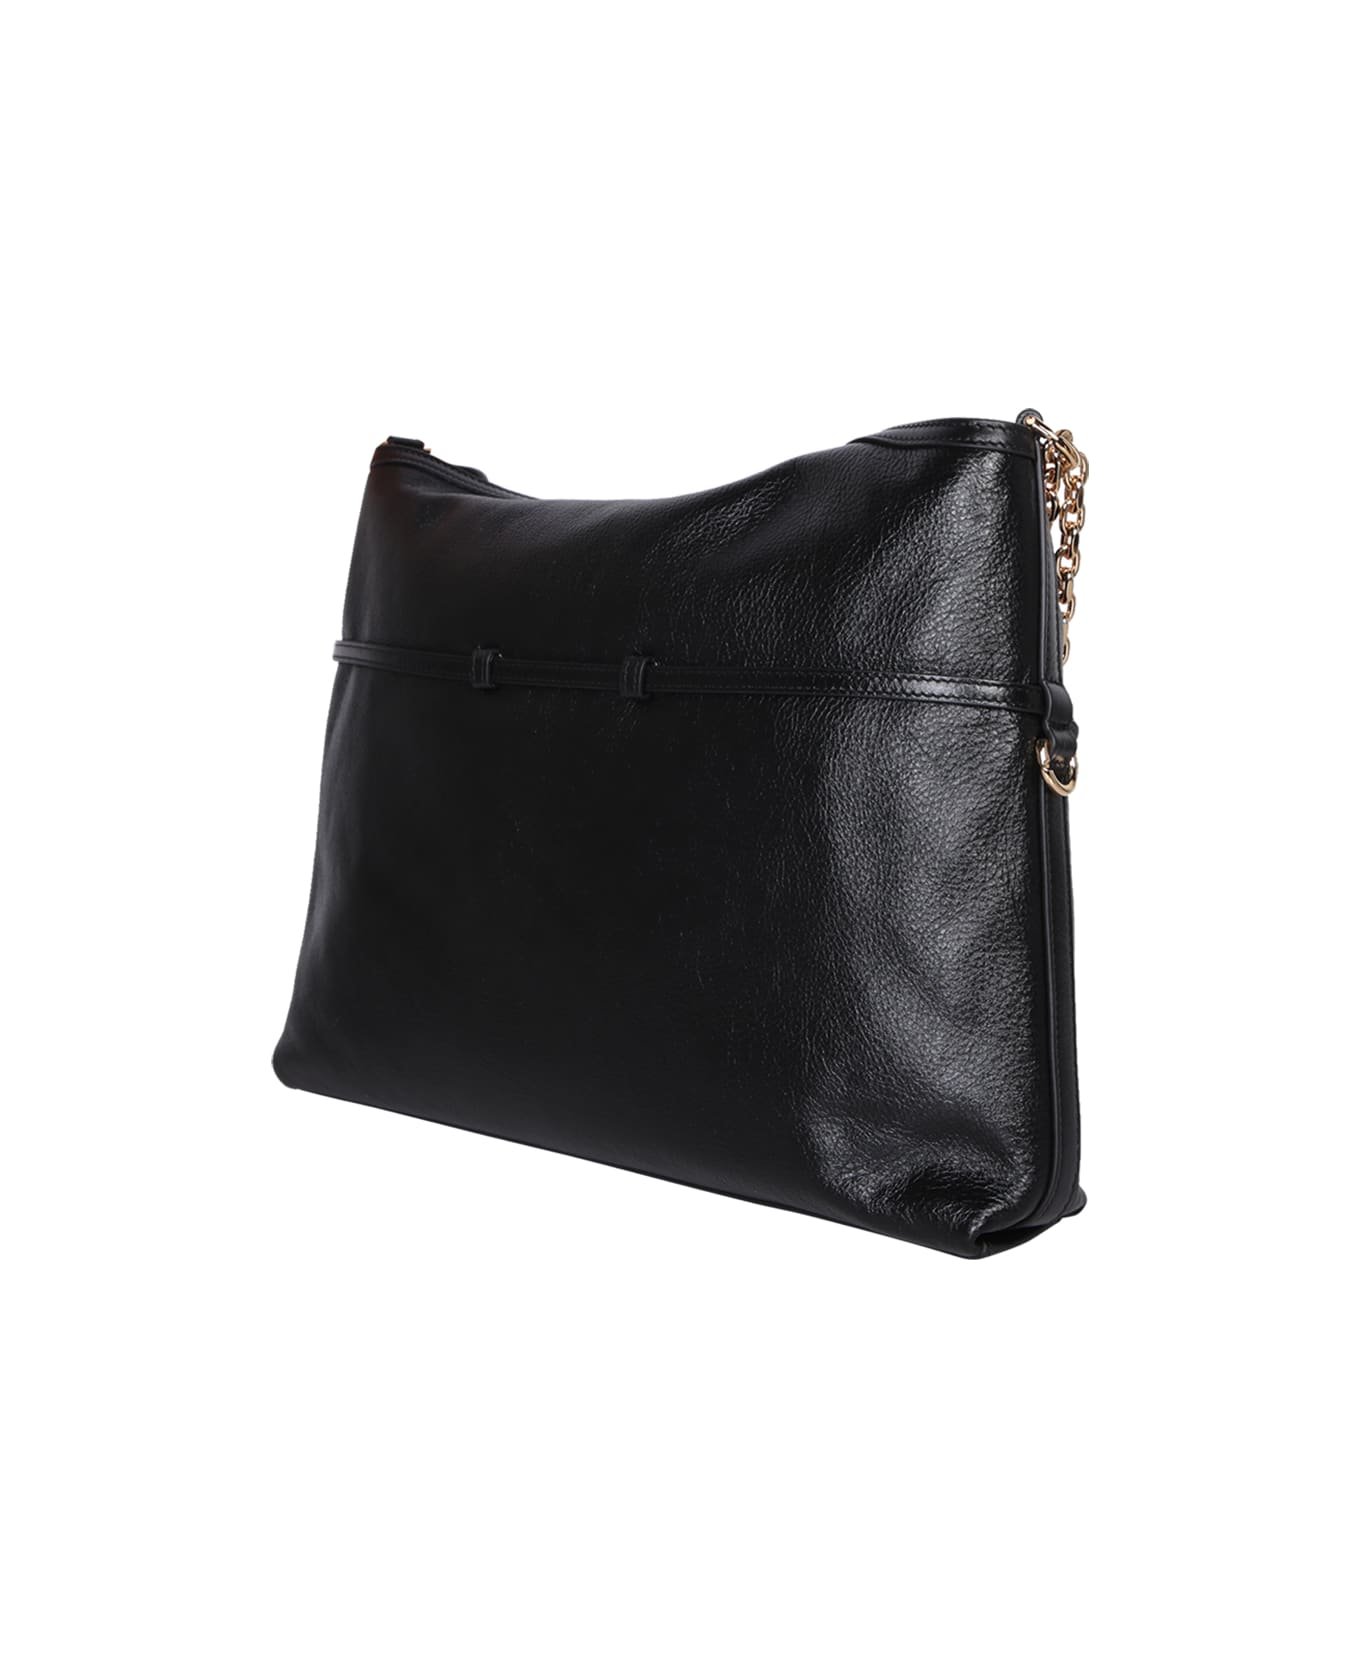 Givenchy Voyou Medium Black Bag - Black